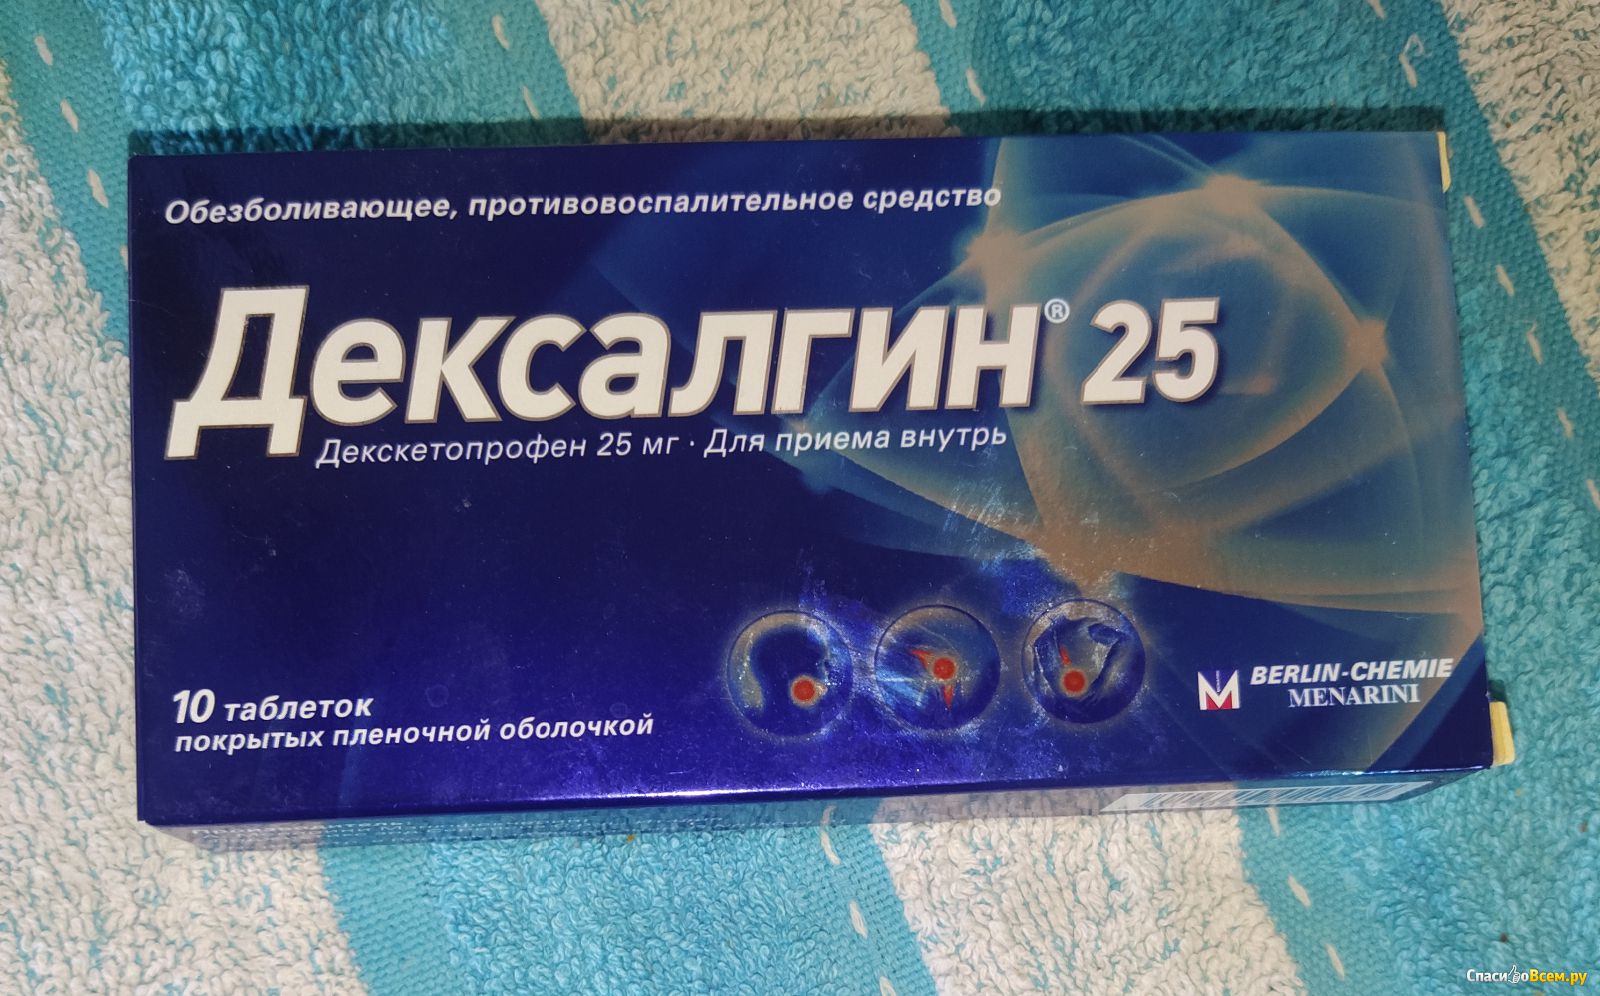 Сильное обезболивающее средство. Обезболивающие таблетки дексалгин. Дексалгин 25 таблетки красная упаковка.